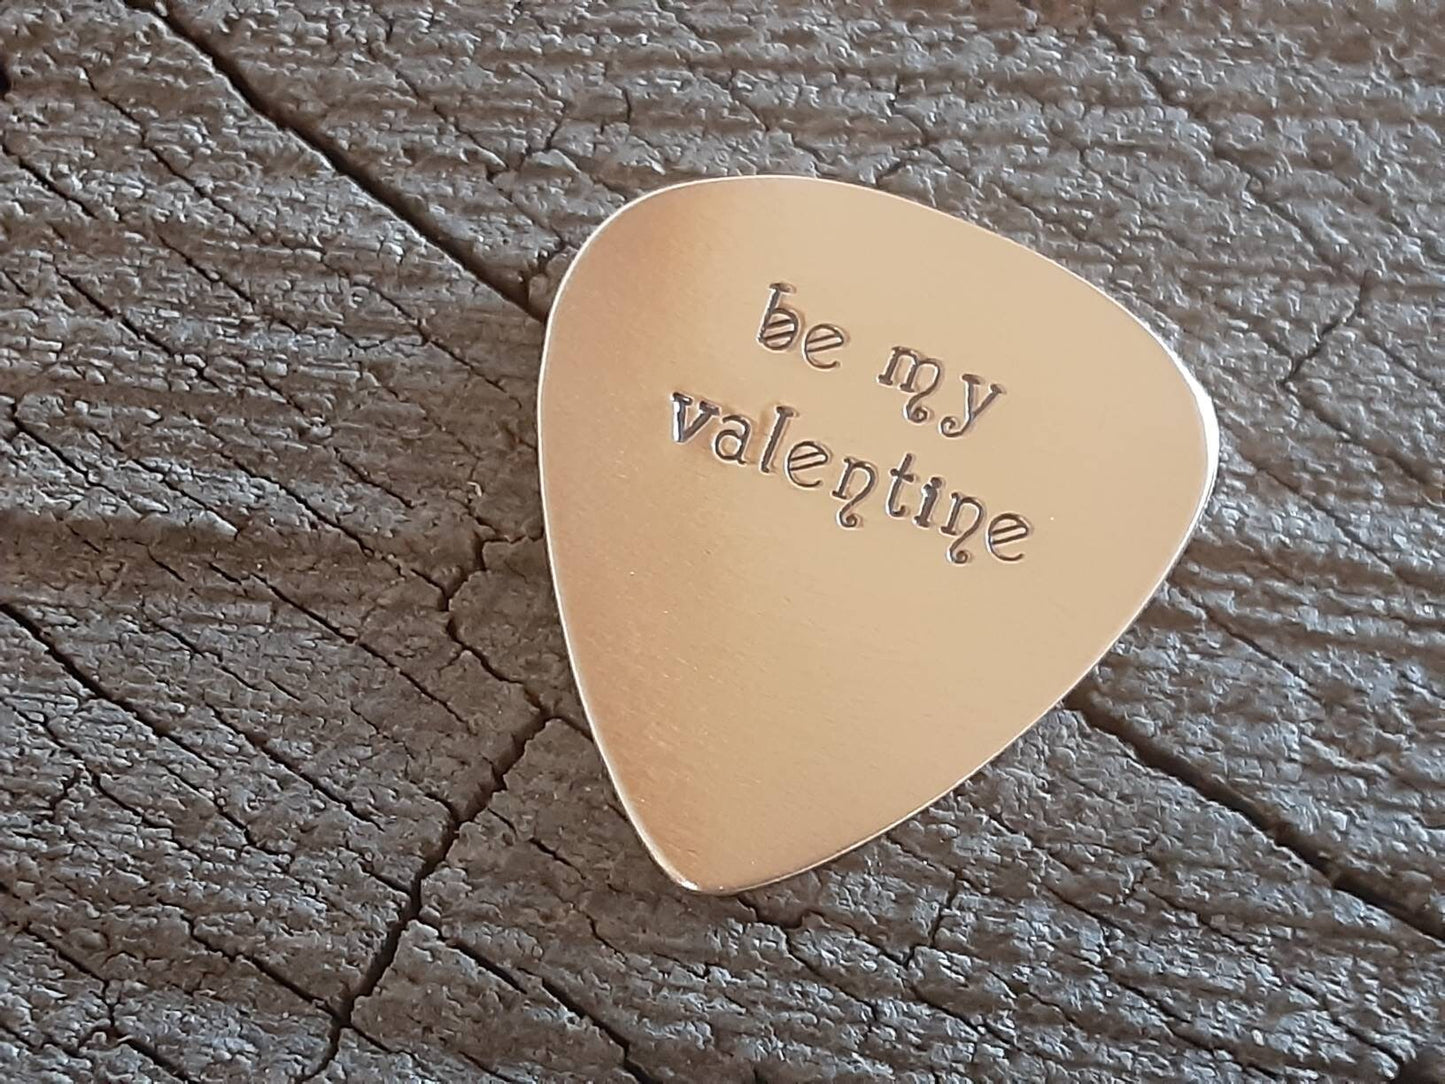 Be my Valentine bronze guitar pick for valentines day